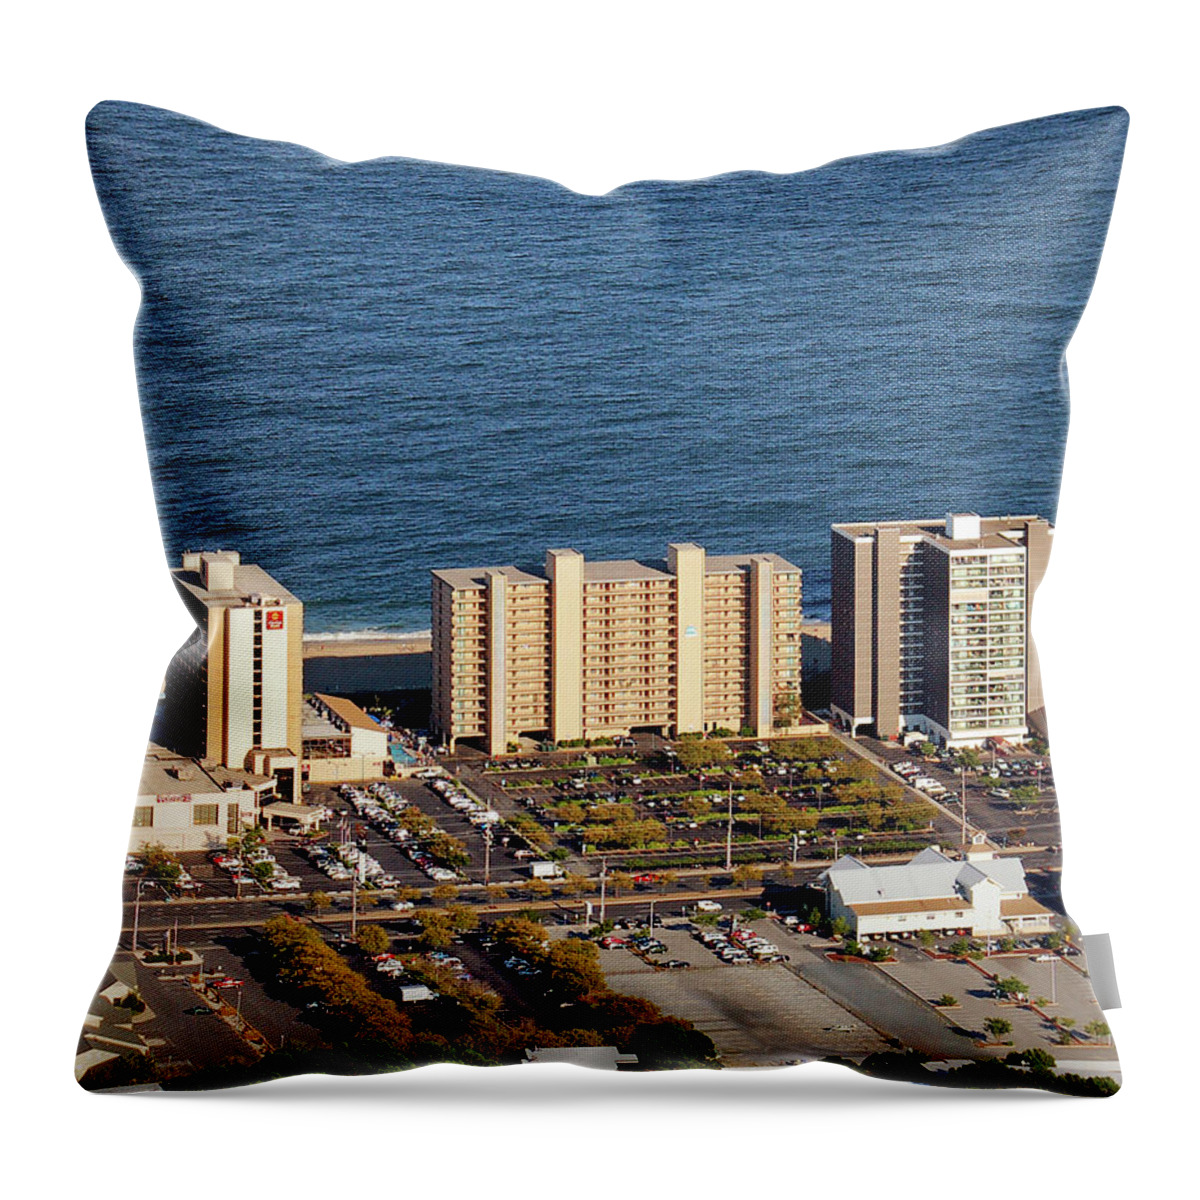 Marigot Beach Condominium Throw Pillow featuring the photograph Marigot Beach Condominium Ocean City MD by Bill Swartwout